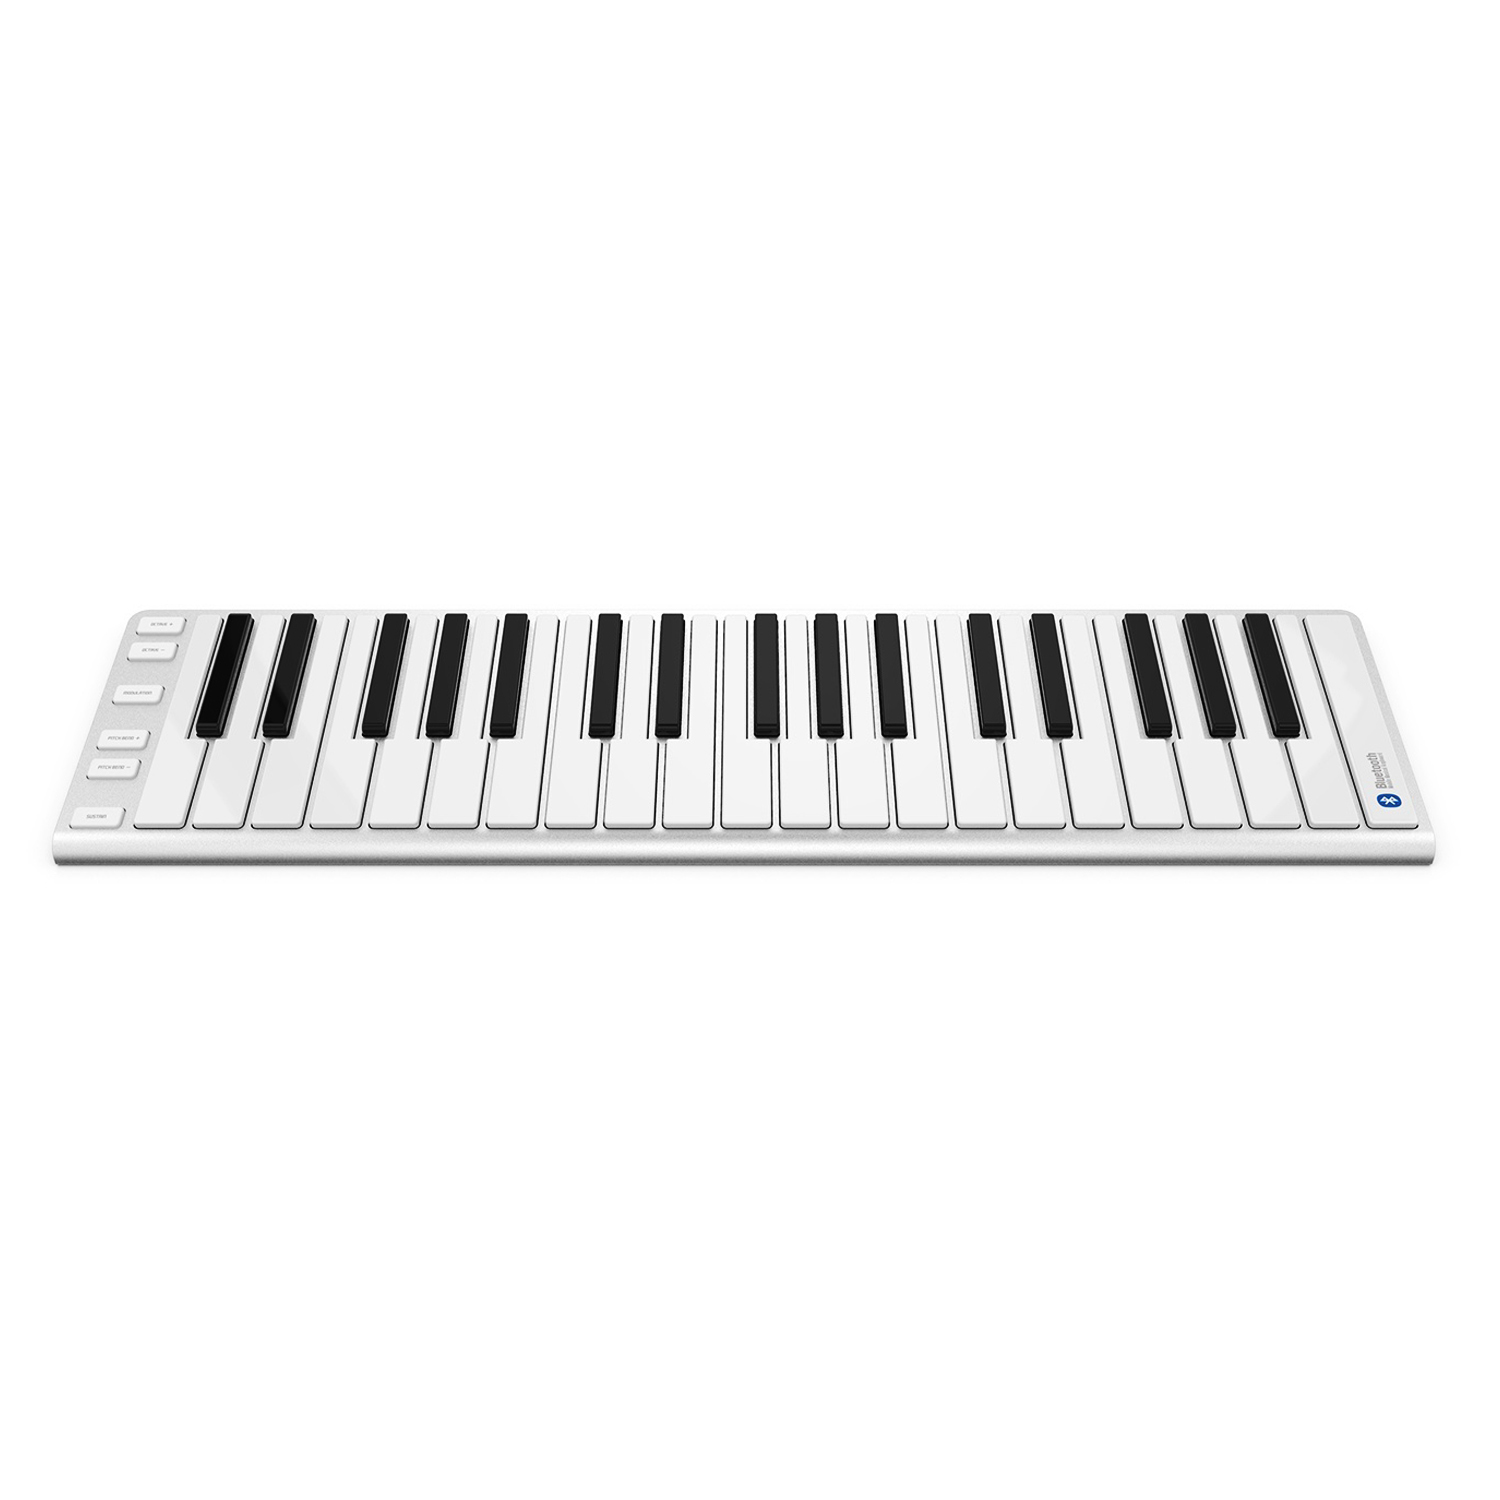 MIDI клавиатуры Artesia Xkey 37 LE midi клавиатуры icon ikeyboard 4s prodrive iii